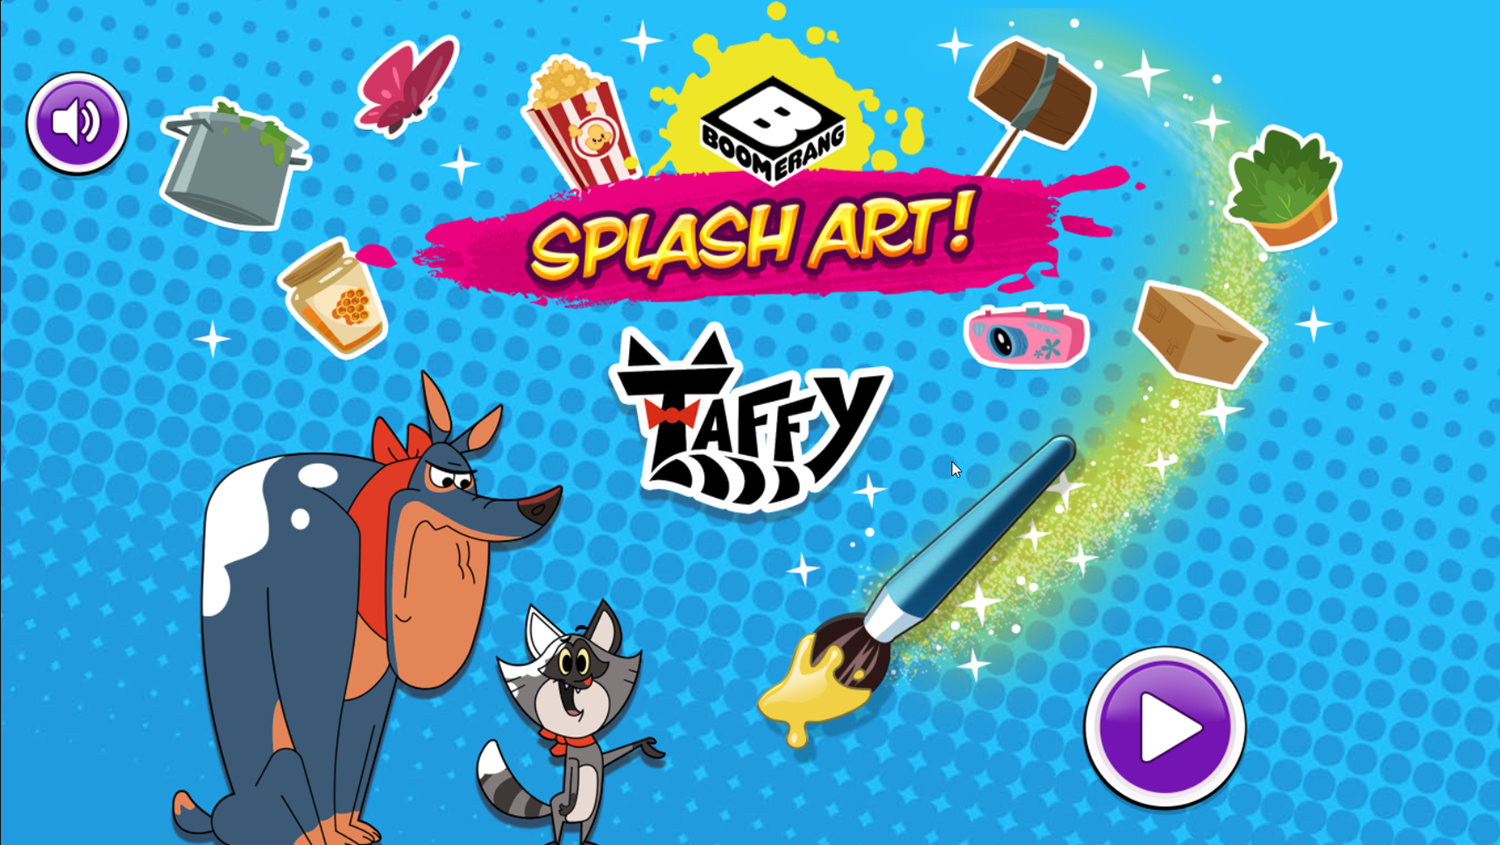 Taffy Splash Art Game Welcome Screen Screenshot.